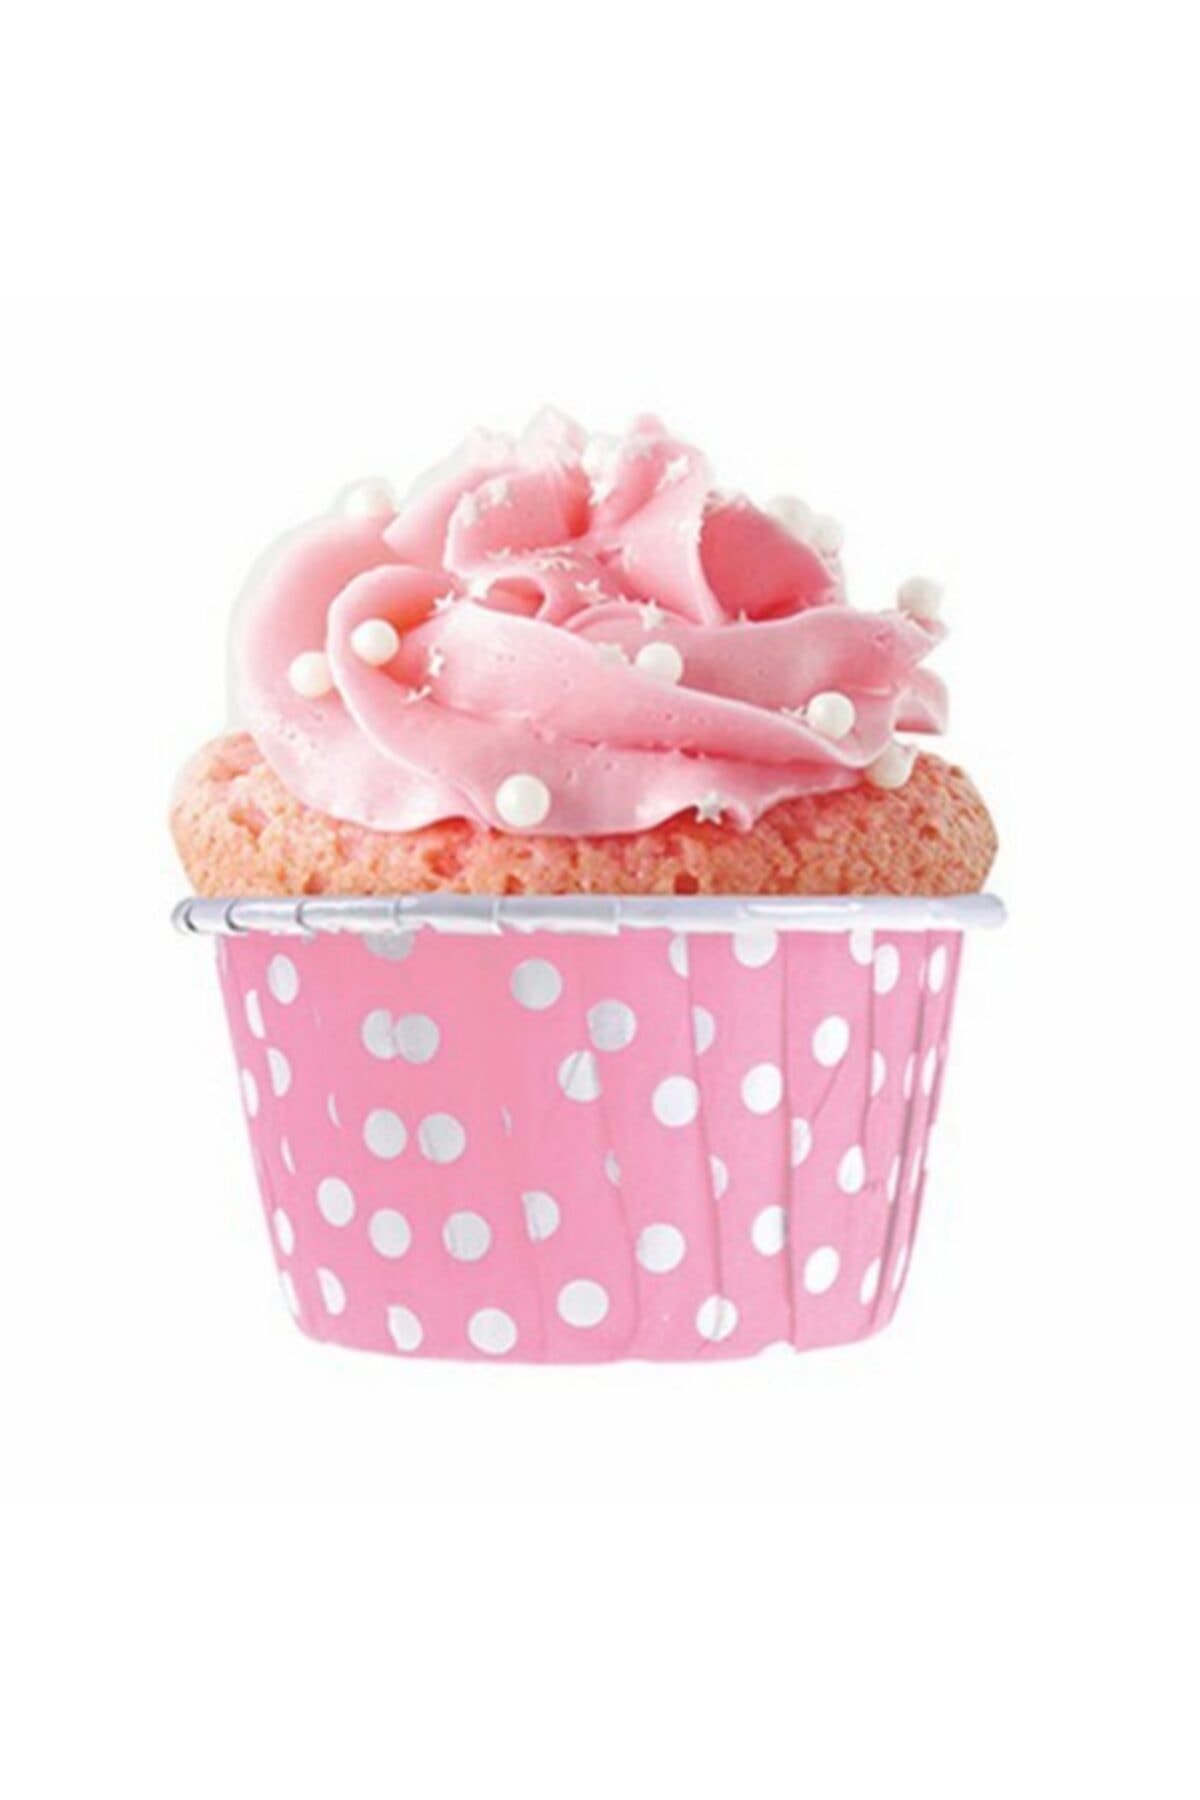 ELGALA Muffin Cupcake Kek Kalıbı Kapsülü Pembe Renk Beyaz Puantiyeli Özel Pet Kapsül 20 Adet